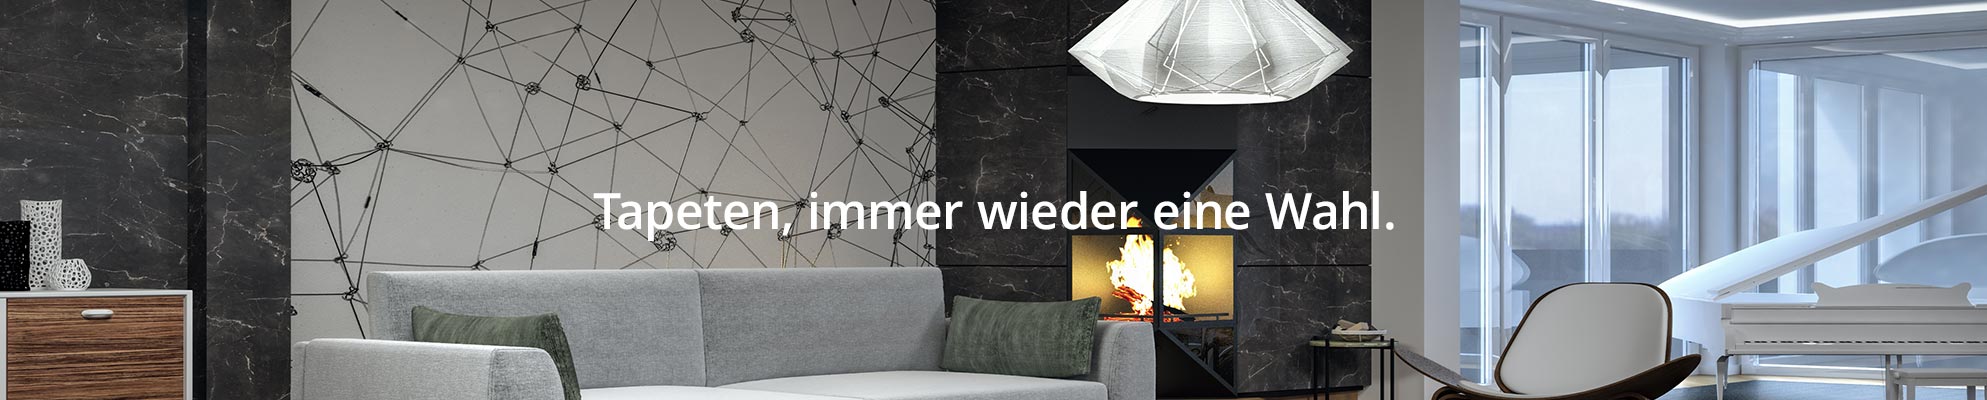 Tapeten-Wohnraumdesign-Maler-Hauser-Naefels